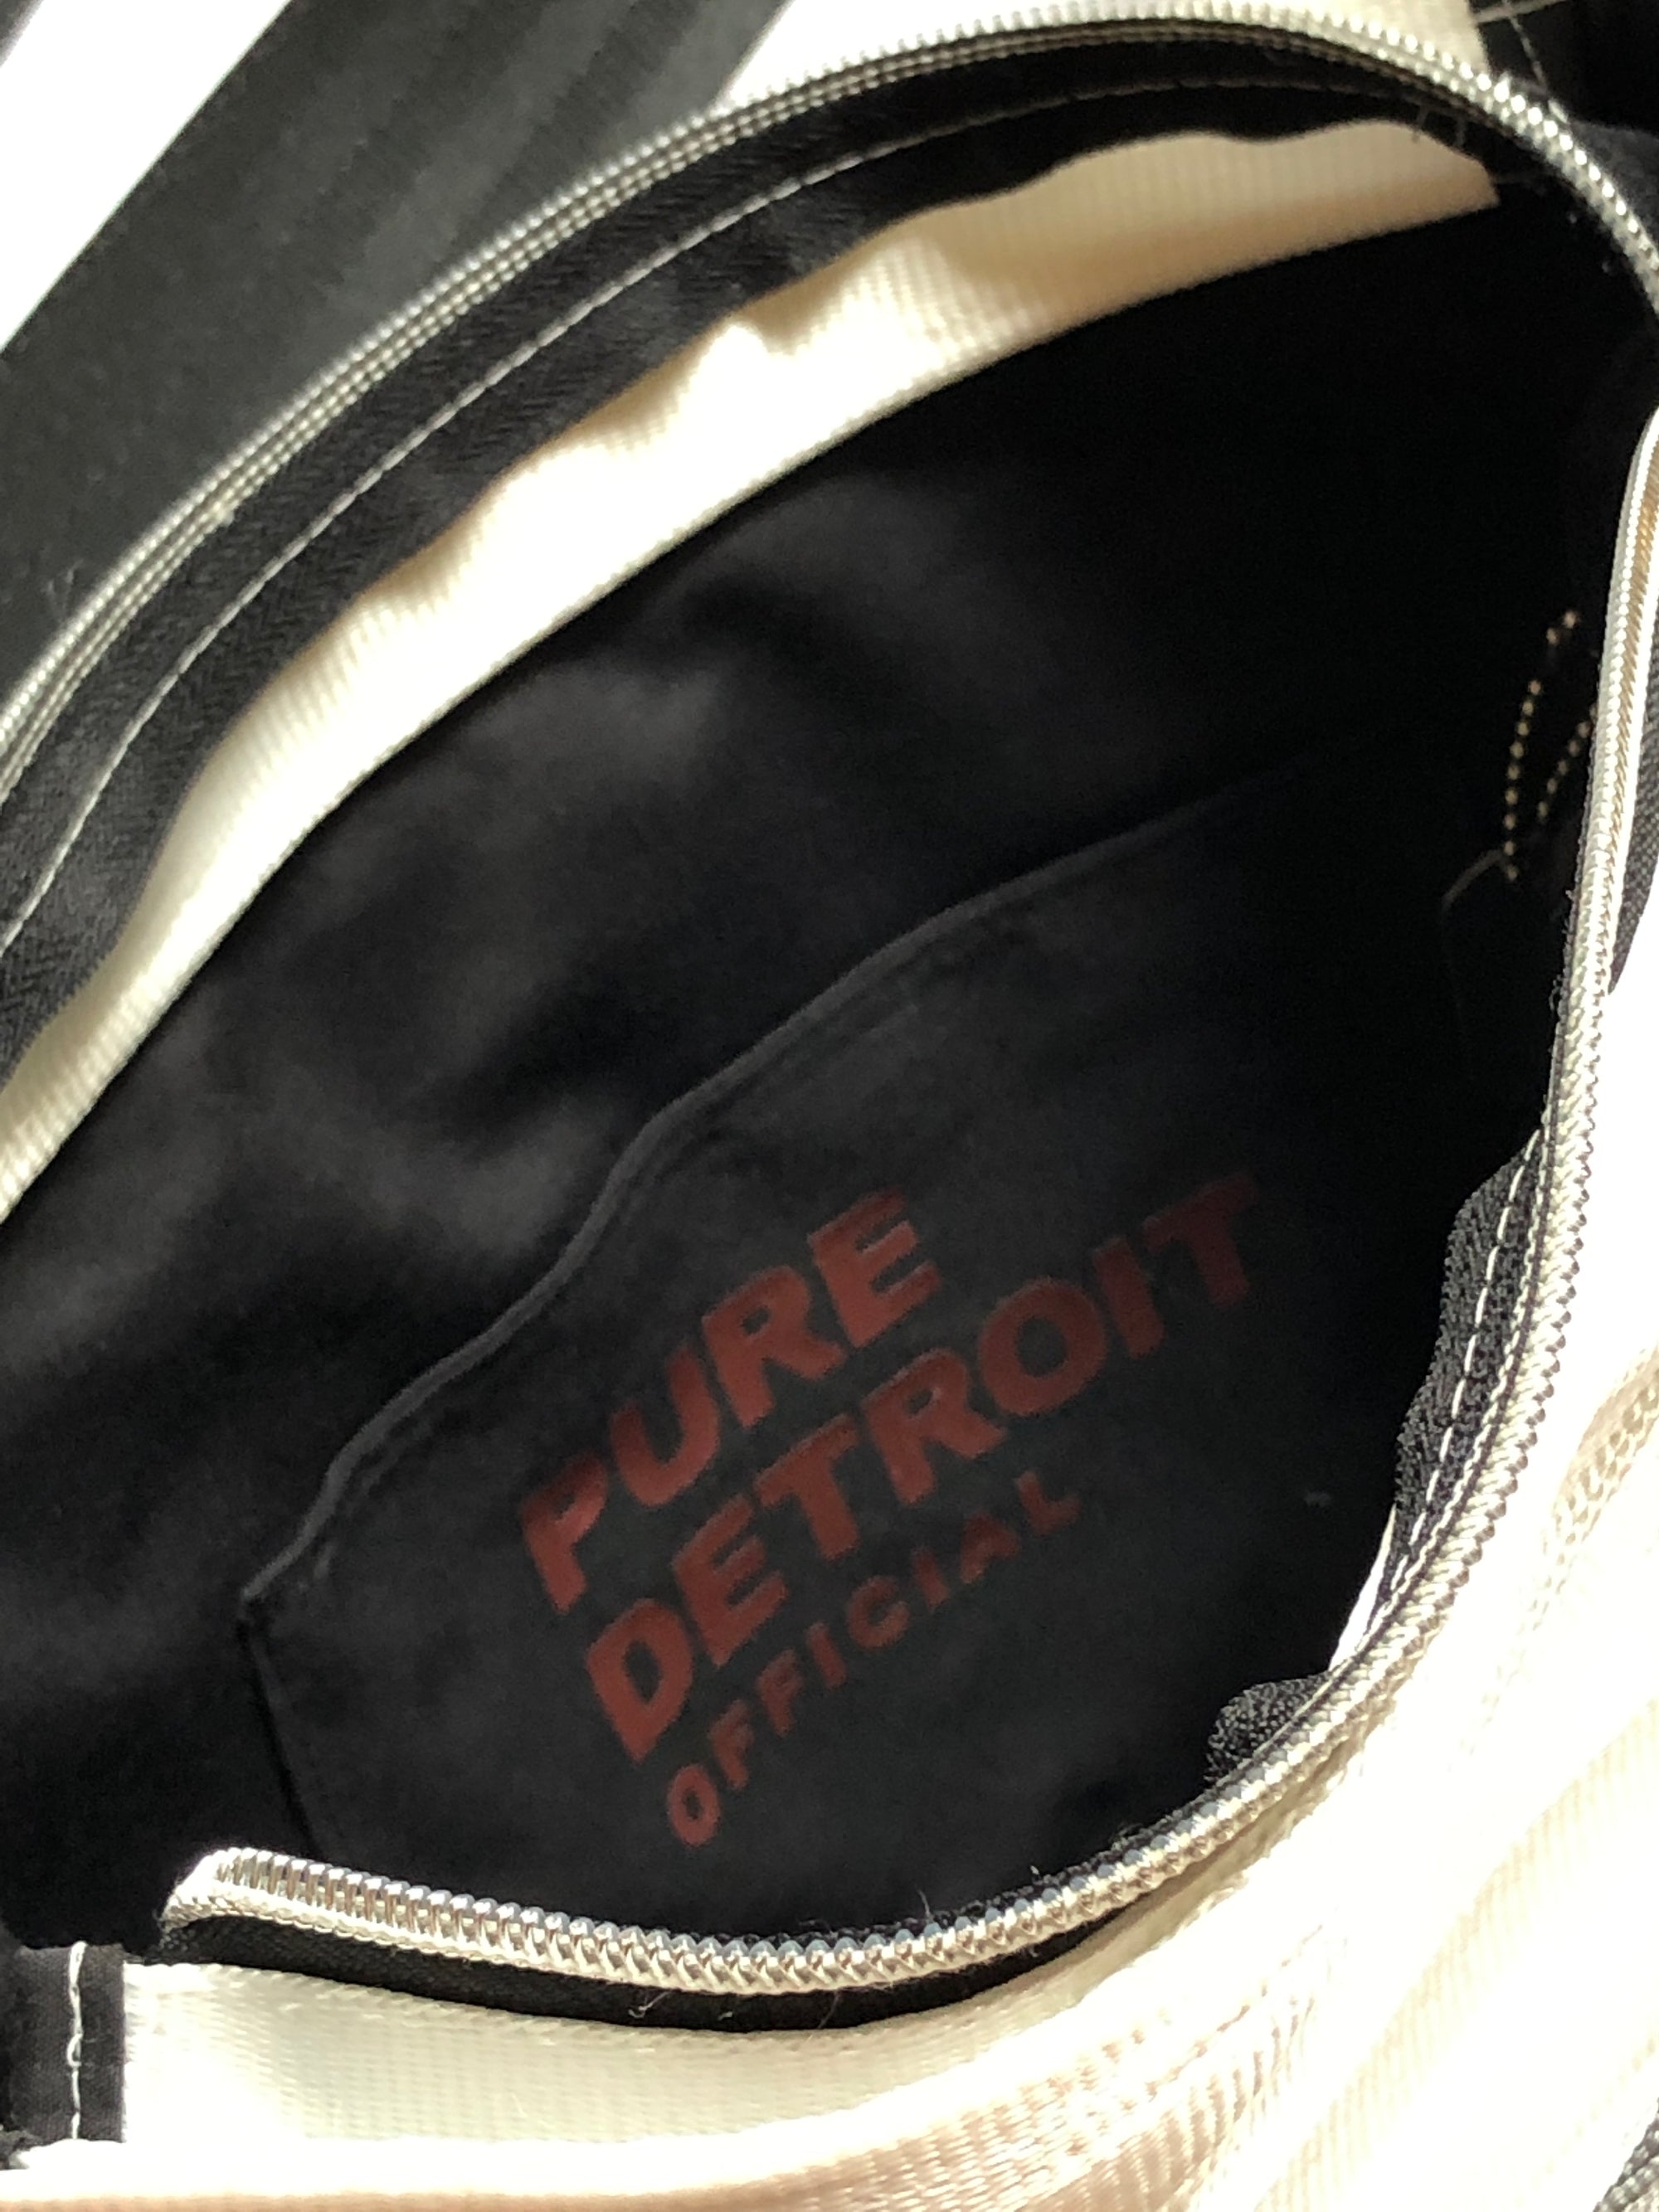 Pure Detroit OFFICIAL - Large City Slinger Tote Seatbelt Bag - Spectrum PRE ORDER Seatbelt Bags   